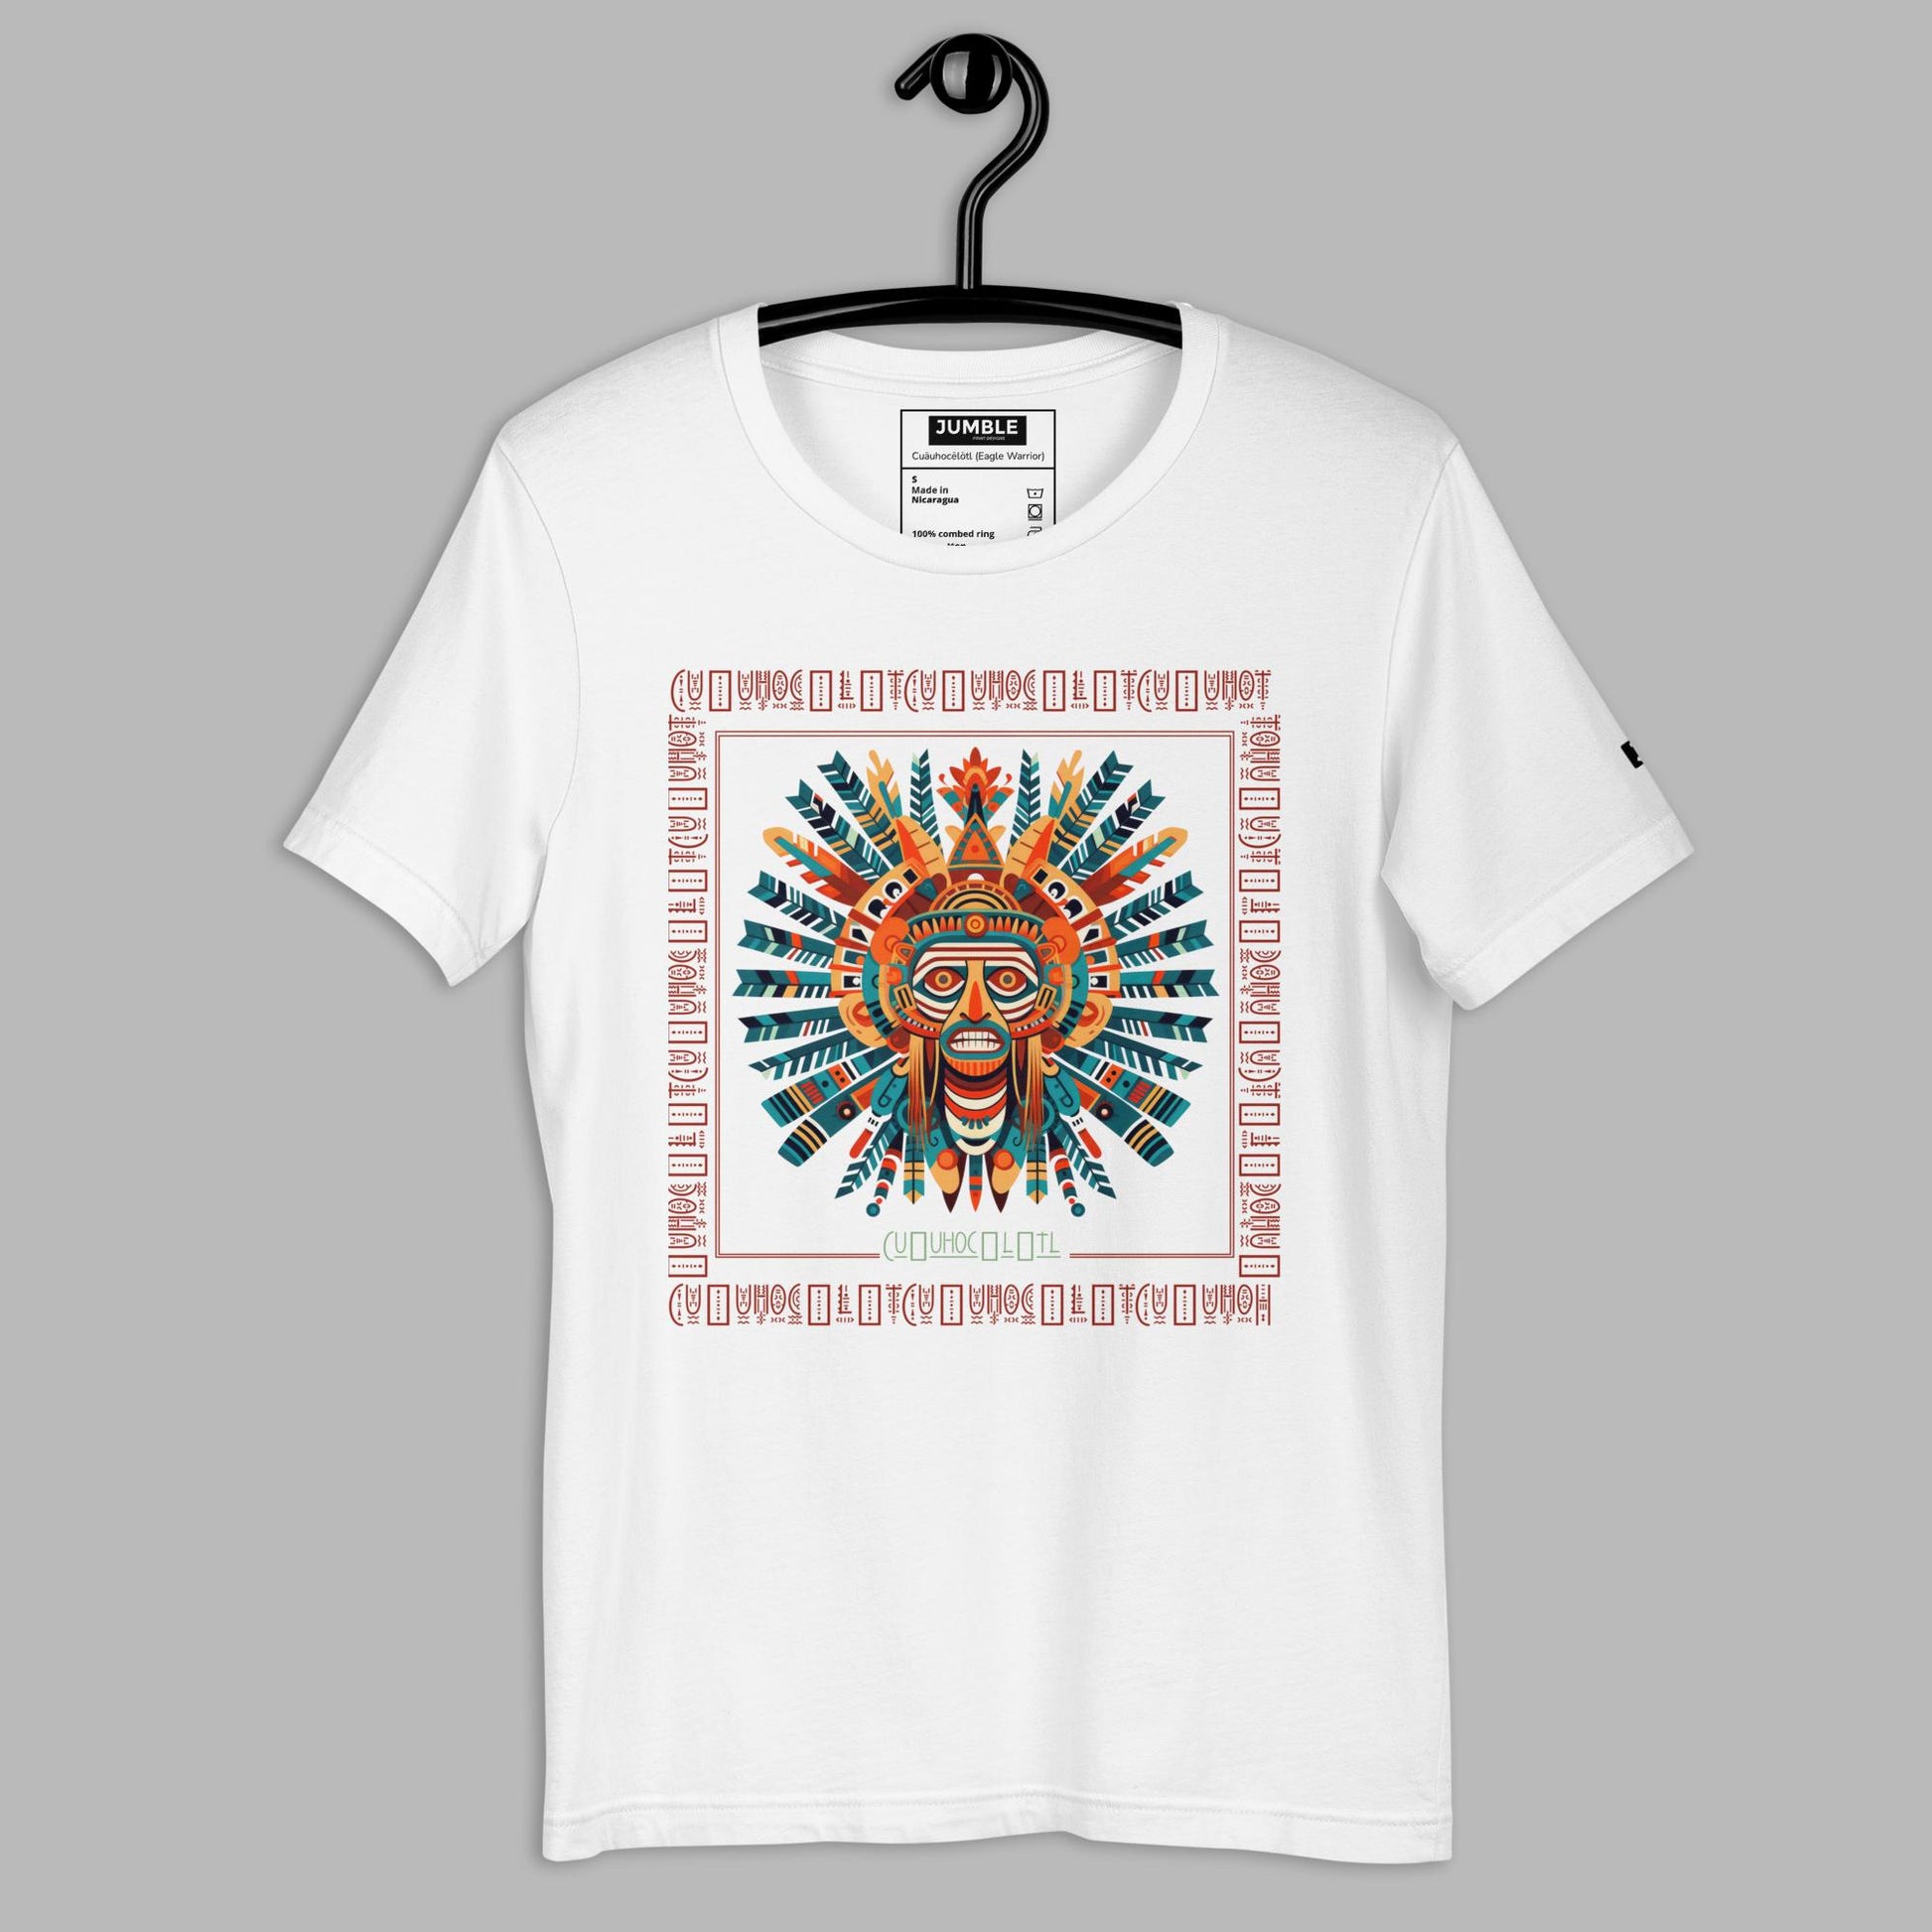 Cuāuhocēlōtl "Eagle Warrior" Unisex t-shirt, white, on hanger